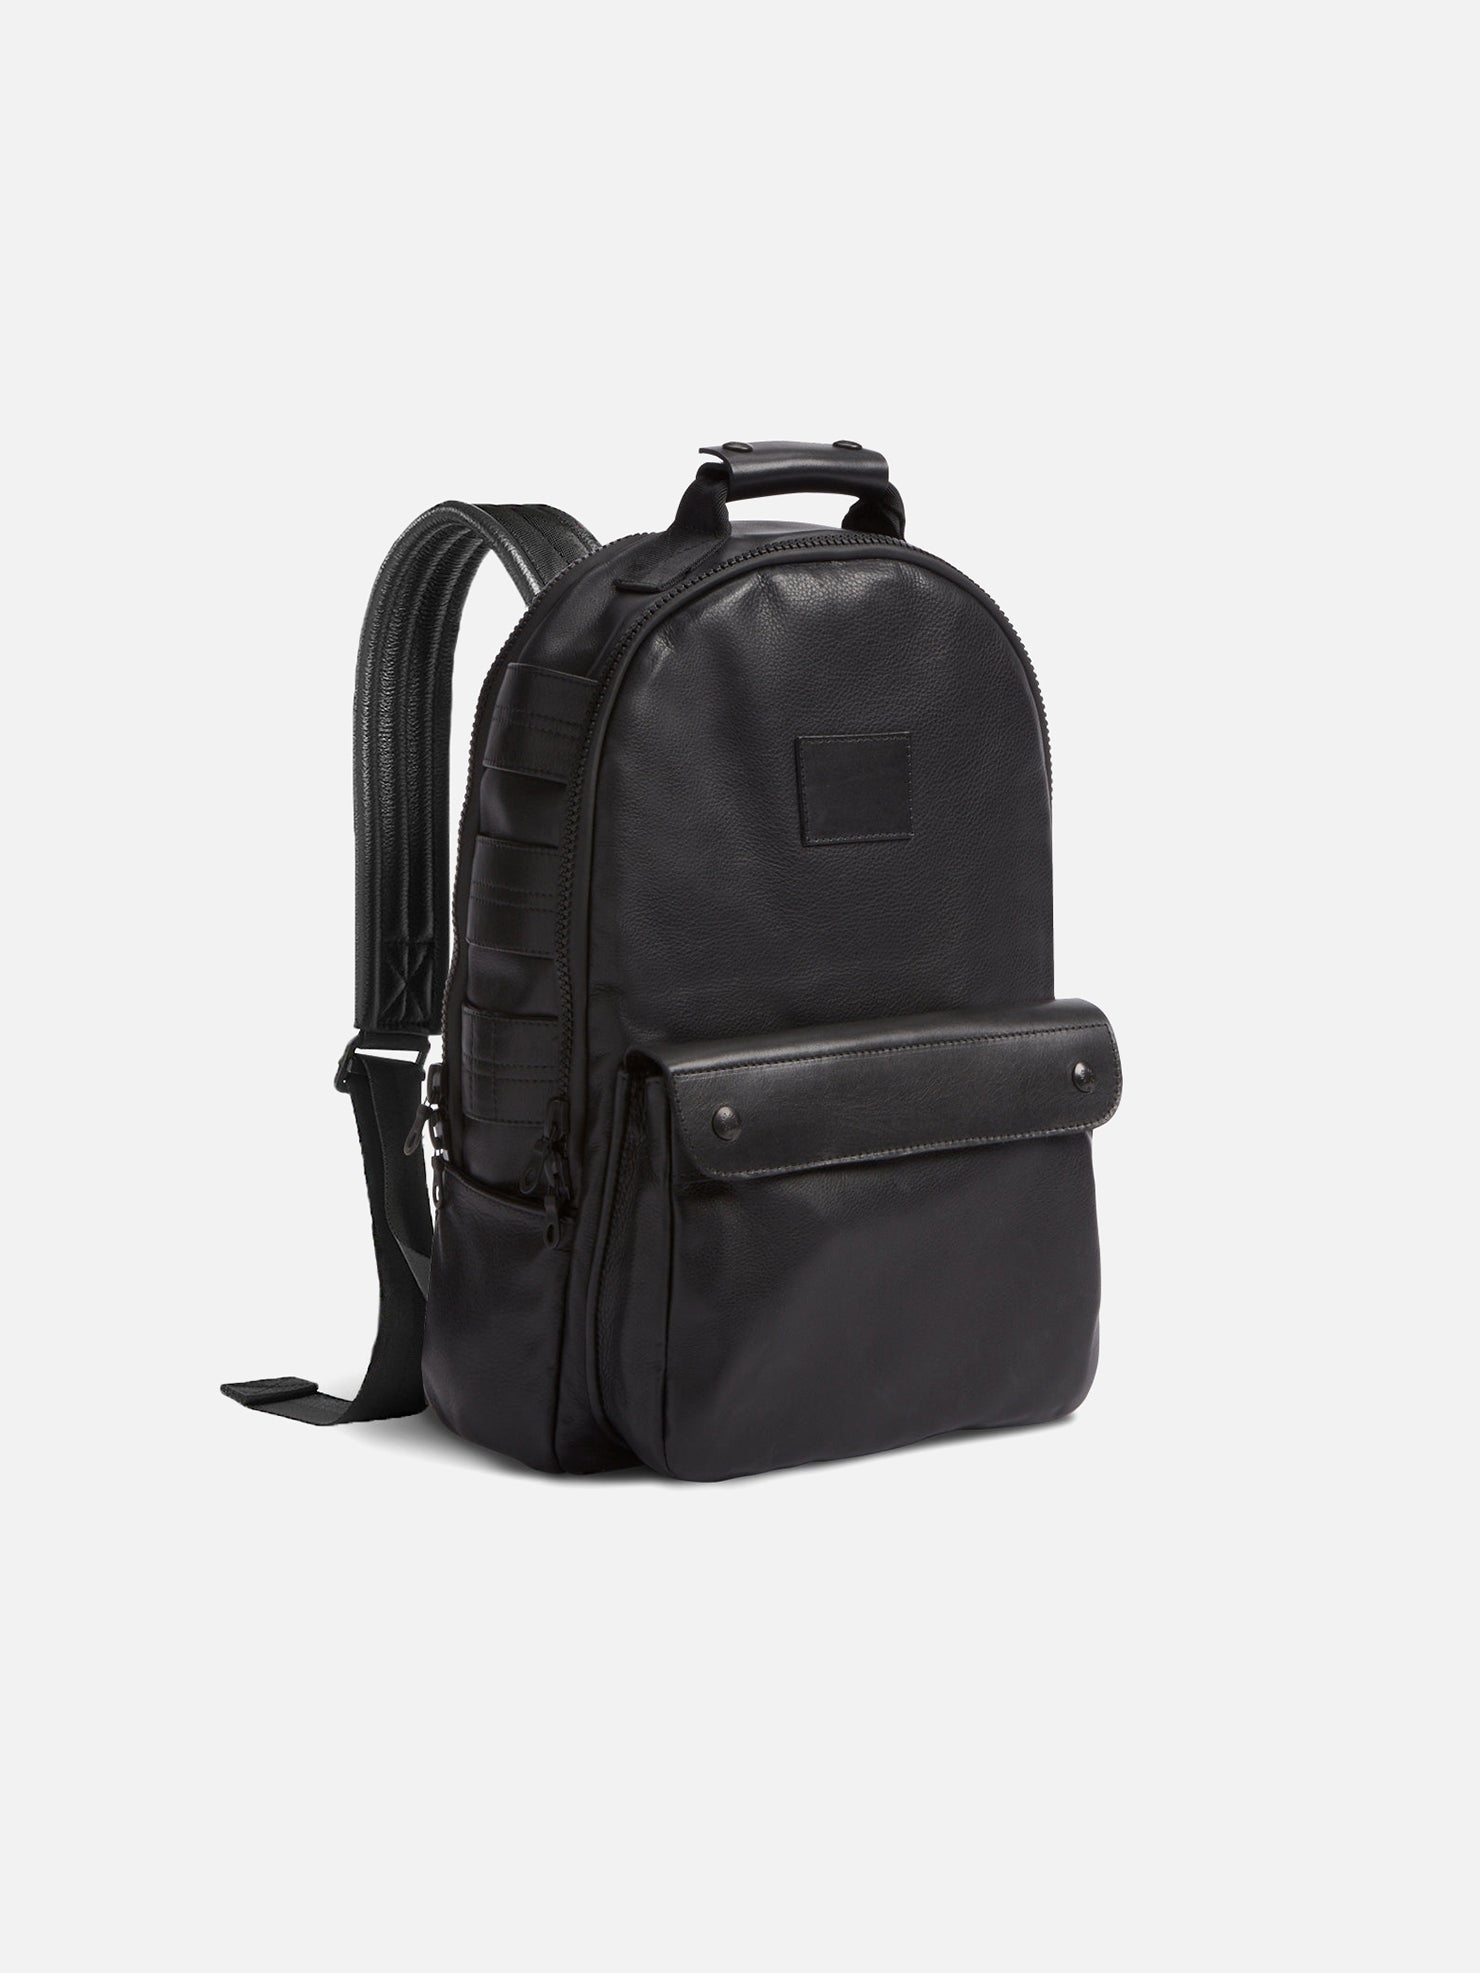 Full Grain Leather Backpack Purse, Designer Backpack, Natural Leather  Fashion Backpack Gift For Her